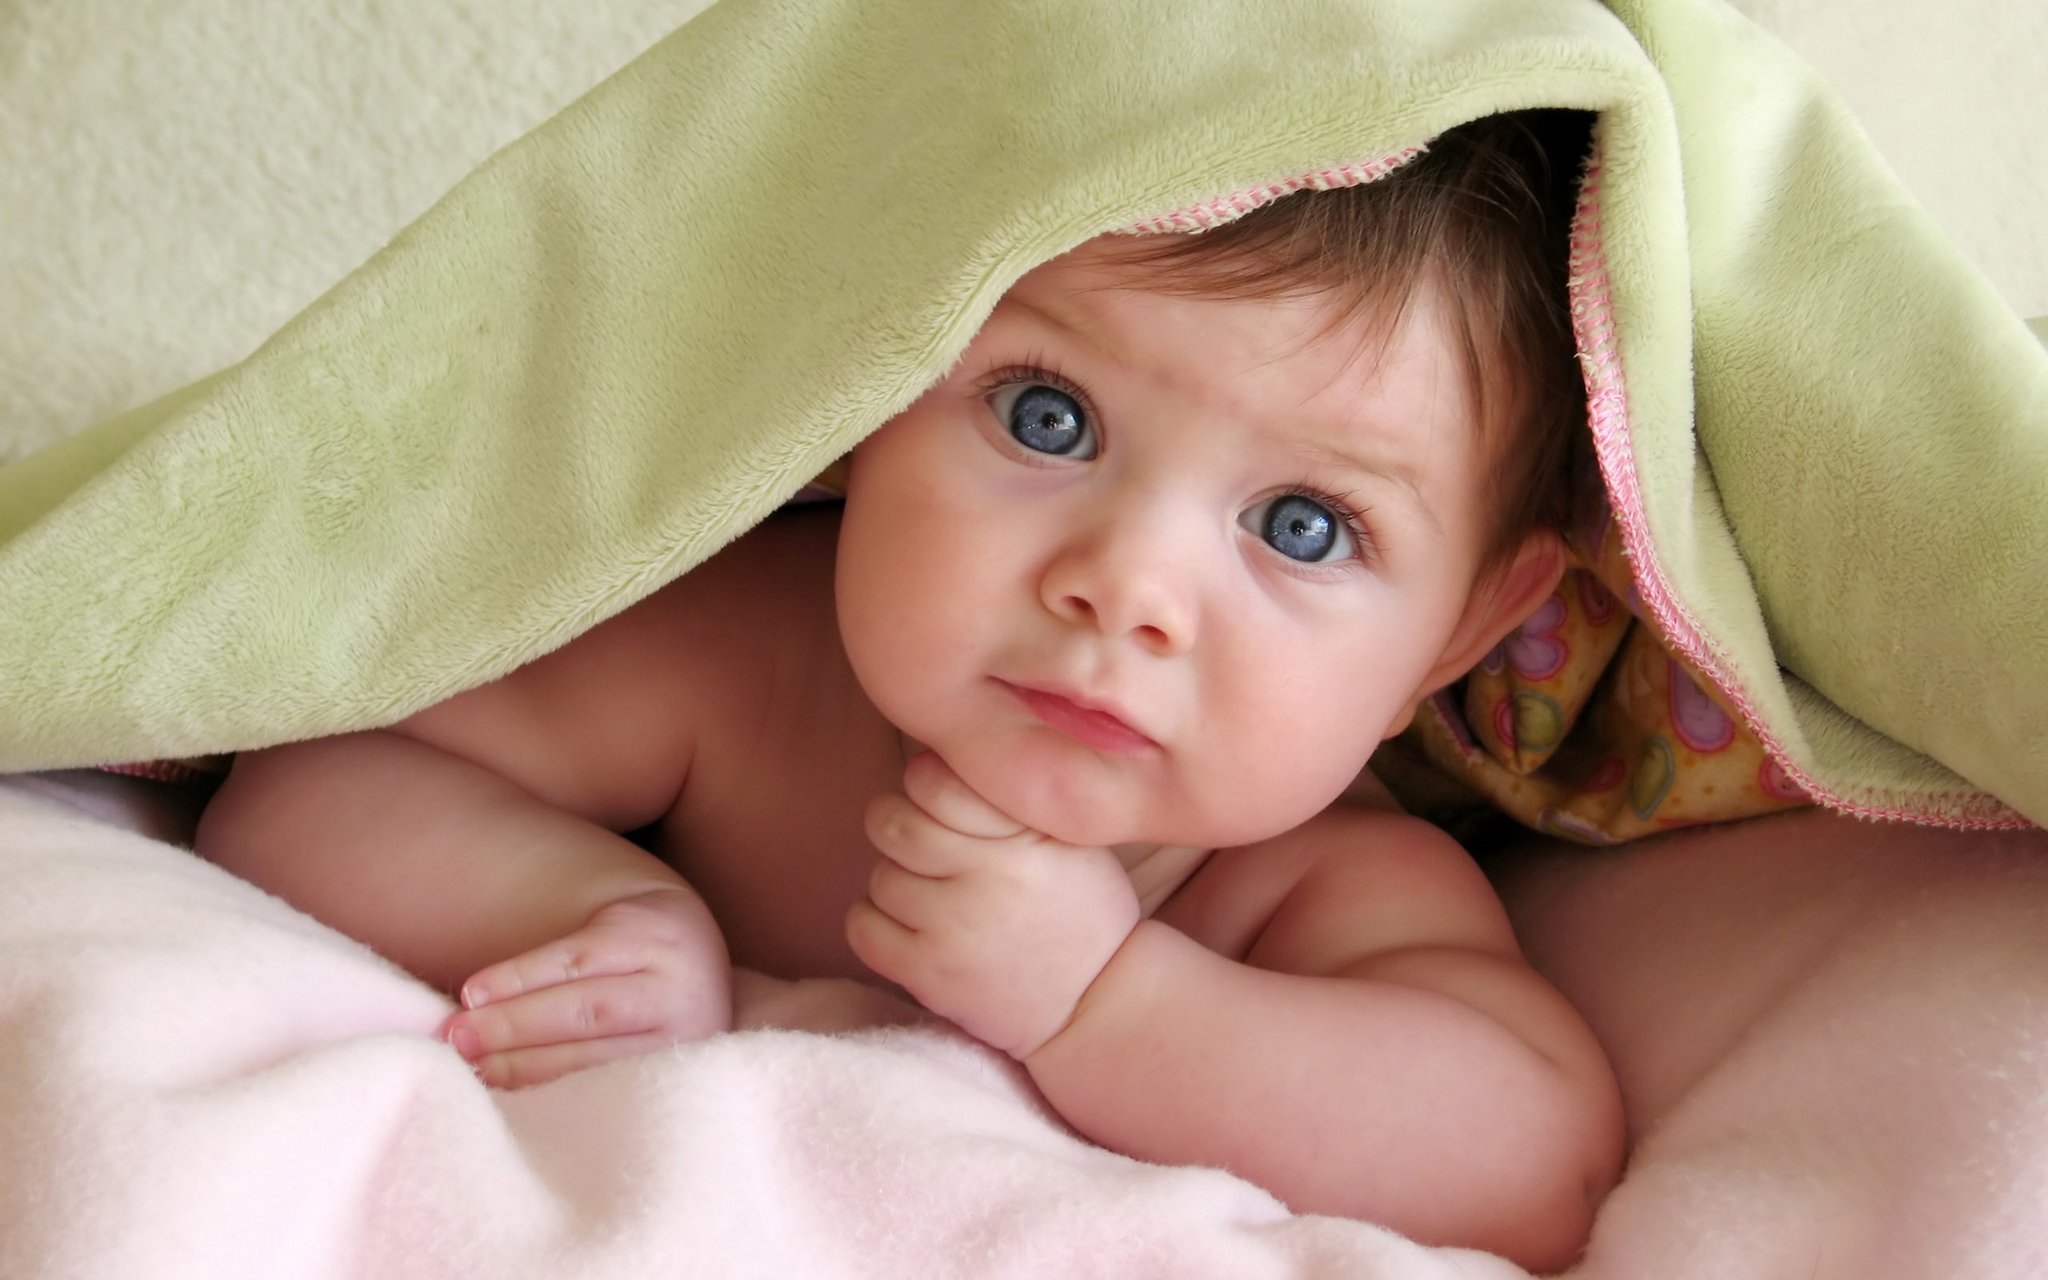 Latest Cute Baby Photos For Desktop Backgrounds 2013 itsmyviews.com